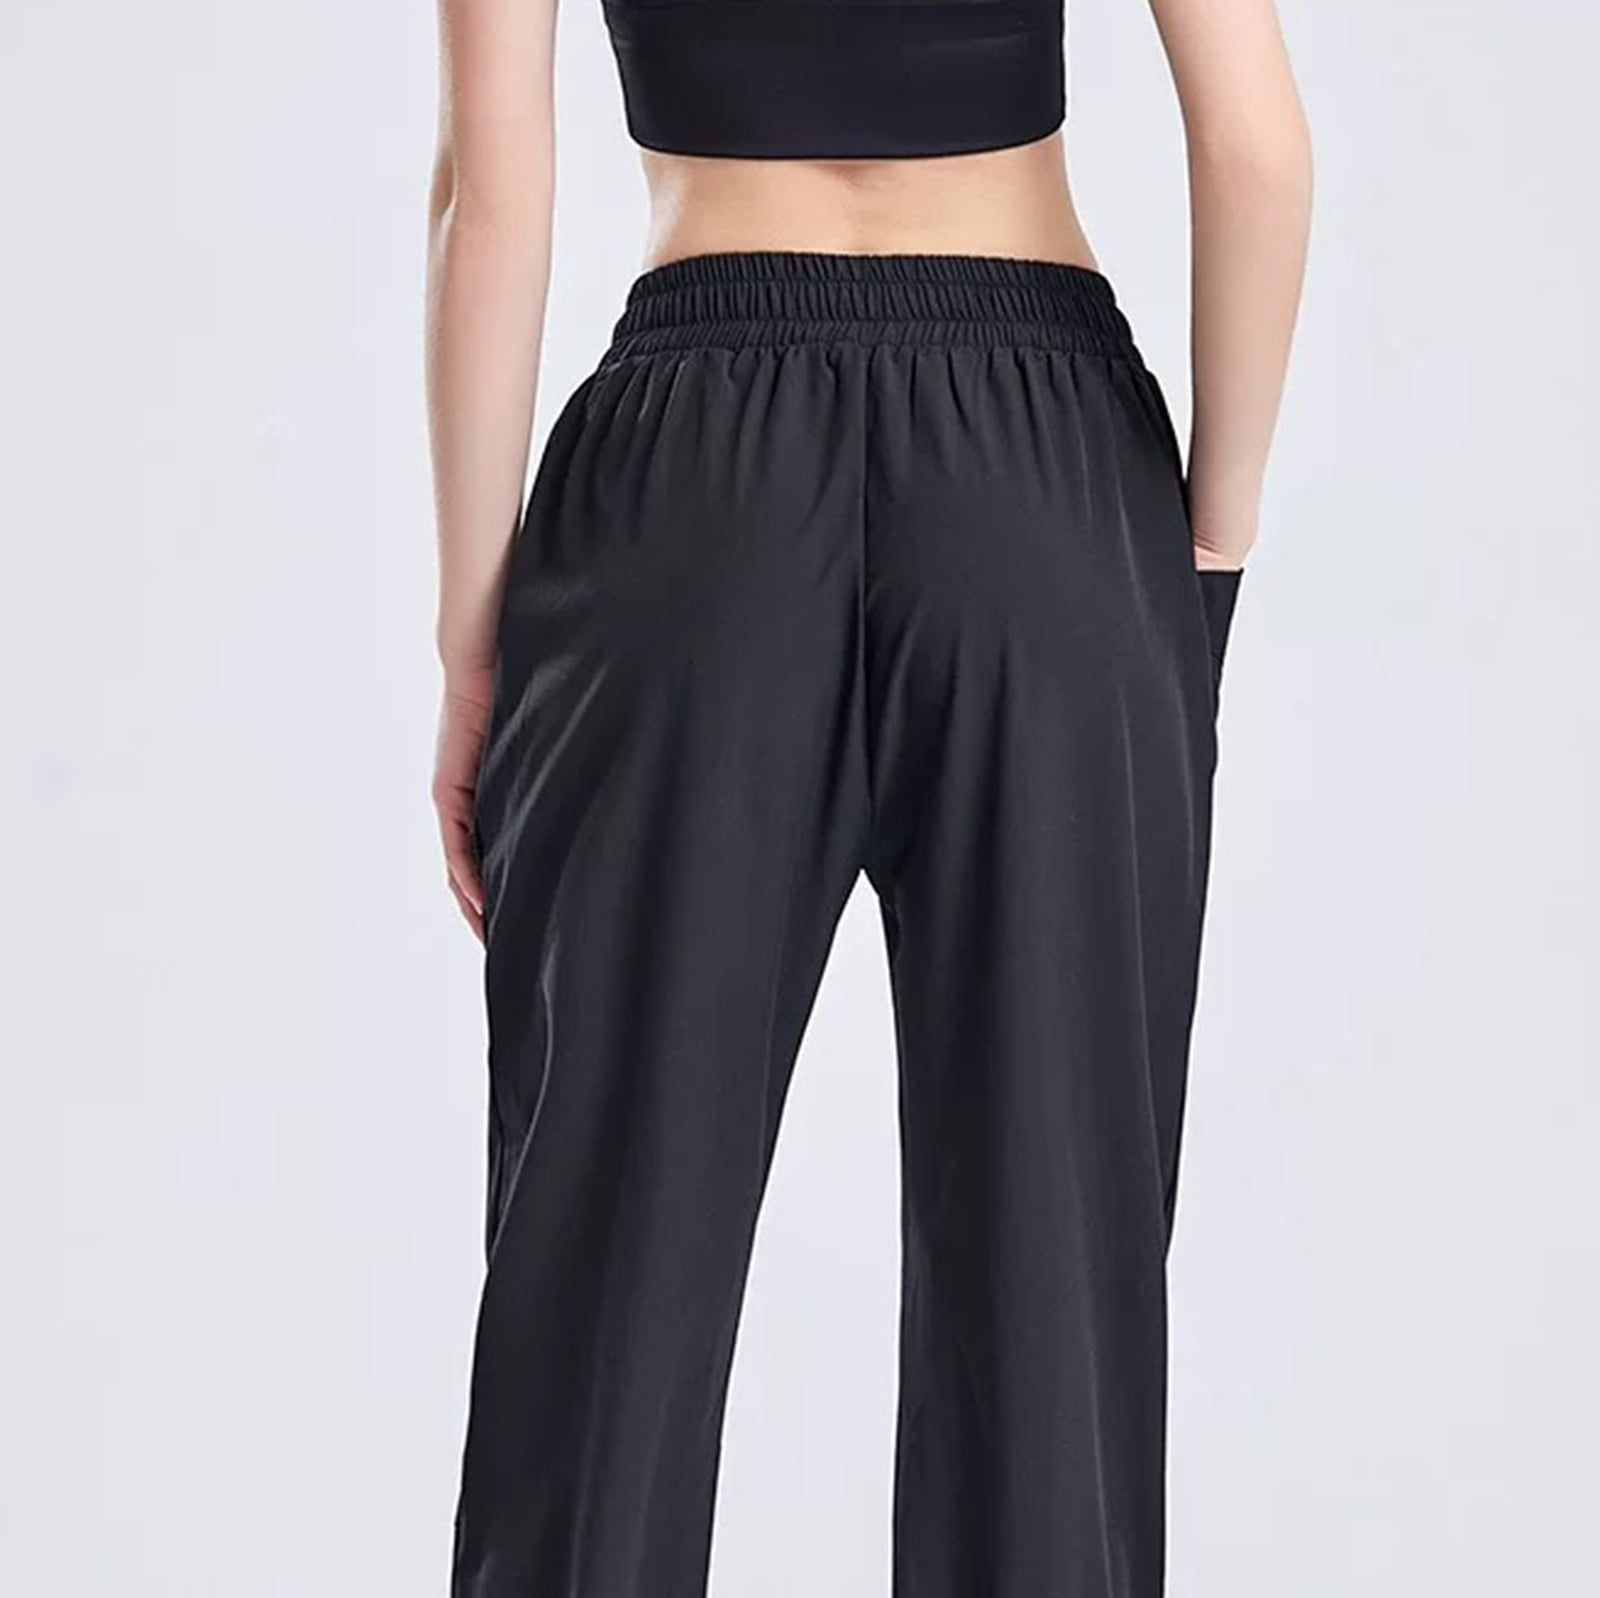 Cotton Plus Size Track Pants For Women - Regular Fit Lowers at Rs 770.00 |  Millar Ganj | Ludhiana| ID: 25869155930